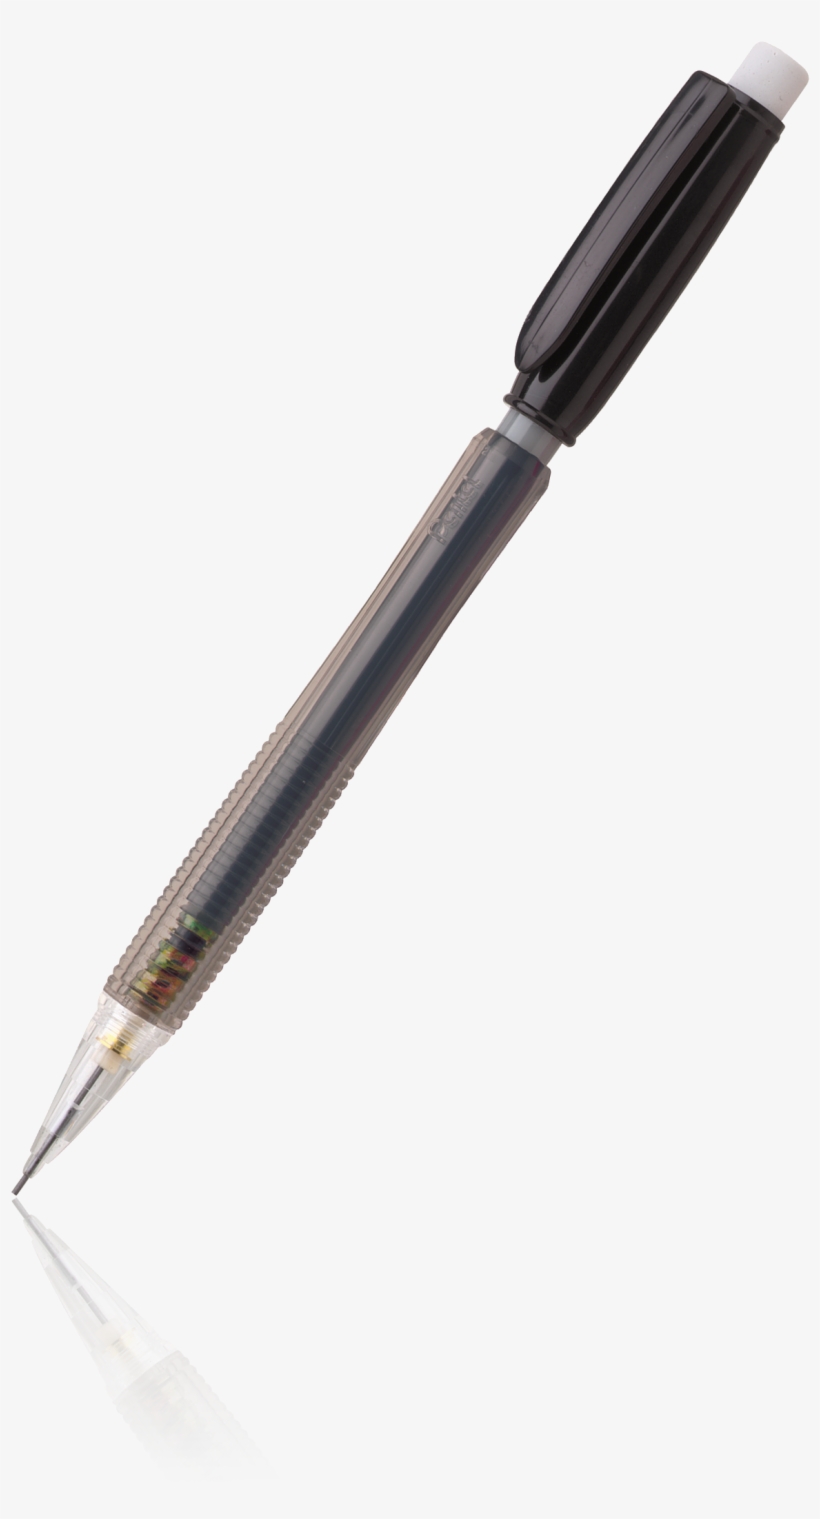 Pen Png Image With Transparent Background - Marking Tools, transparent png #274806